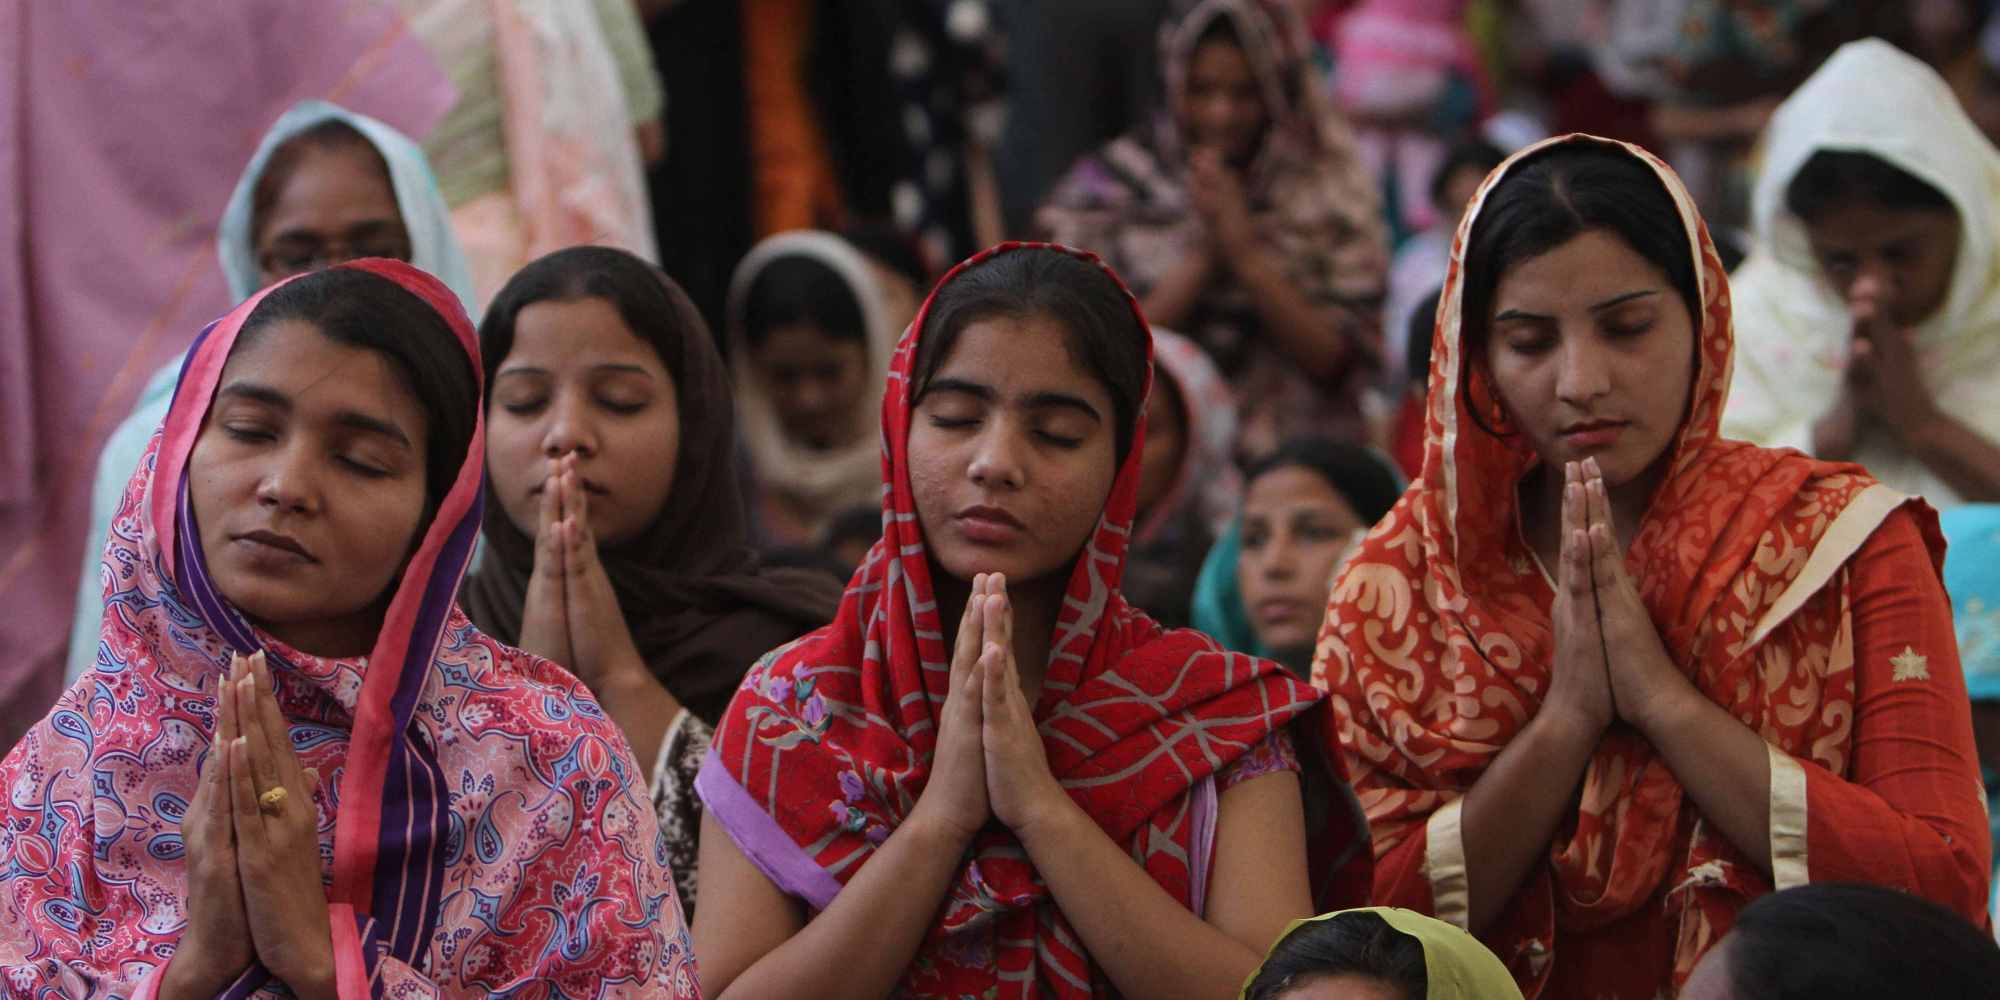 Pakistan religion